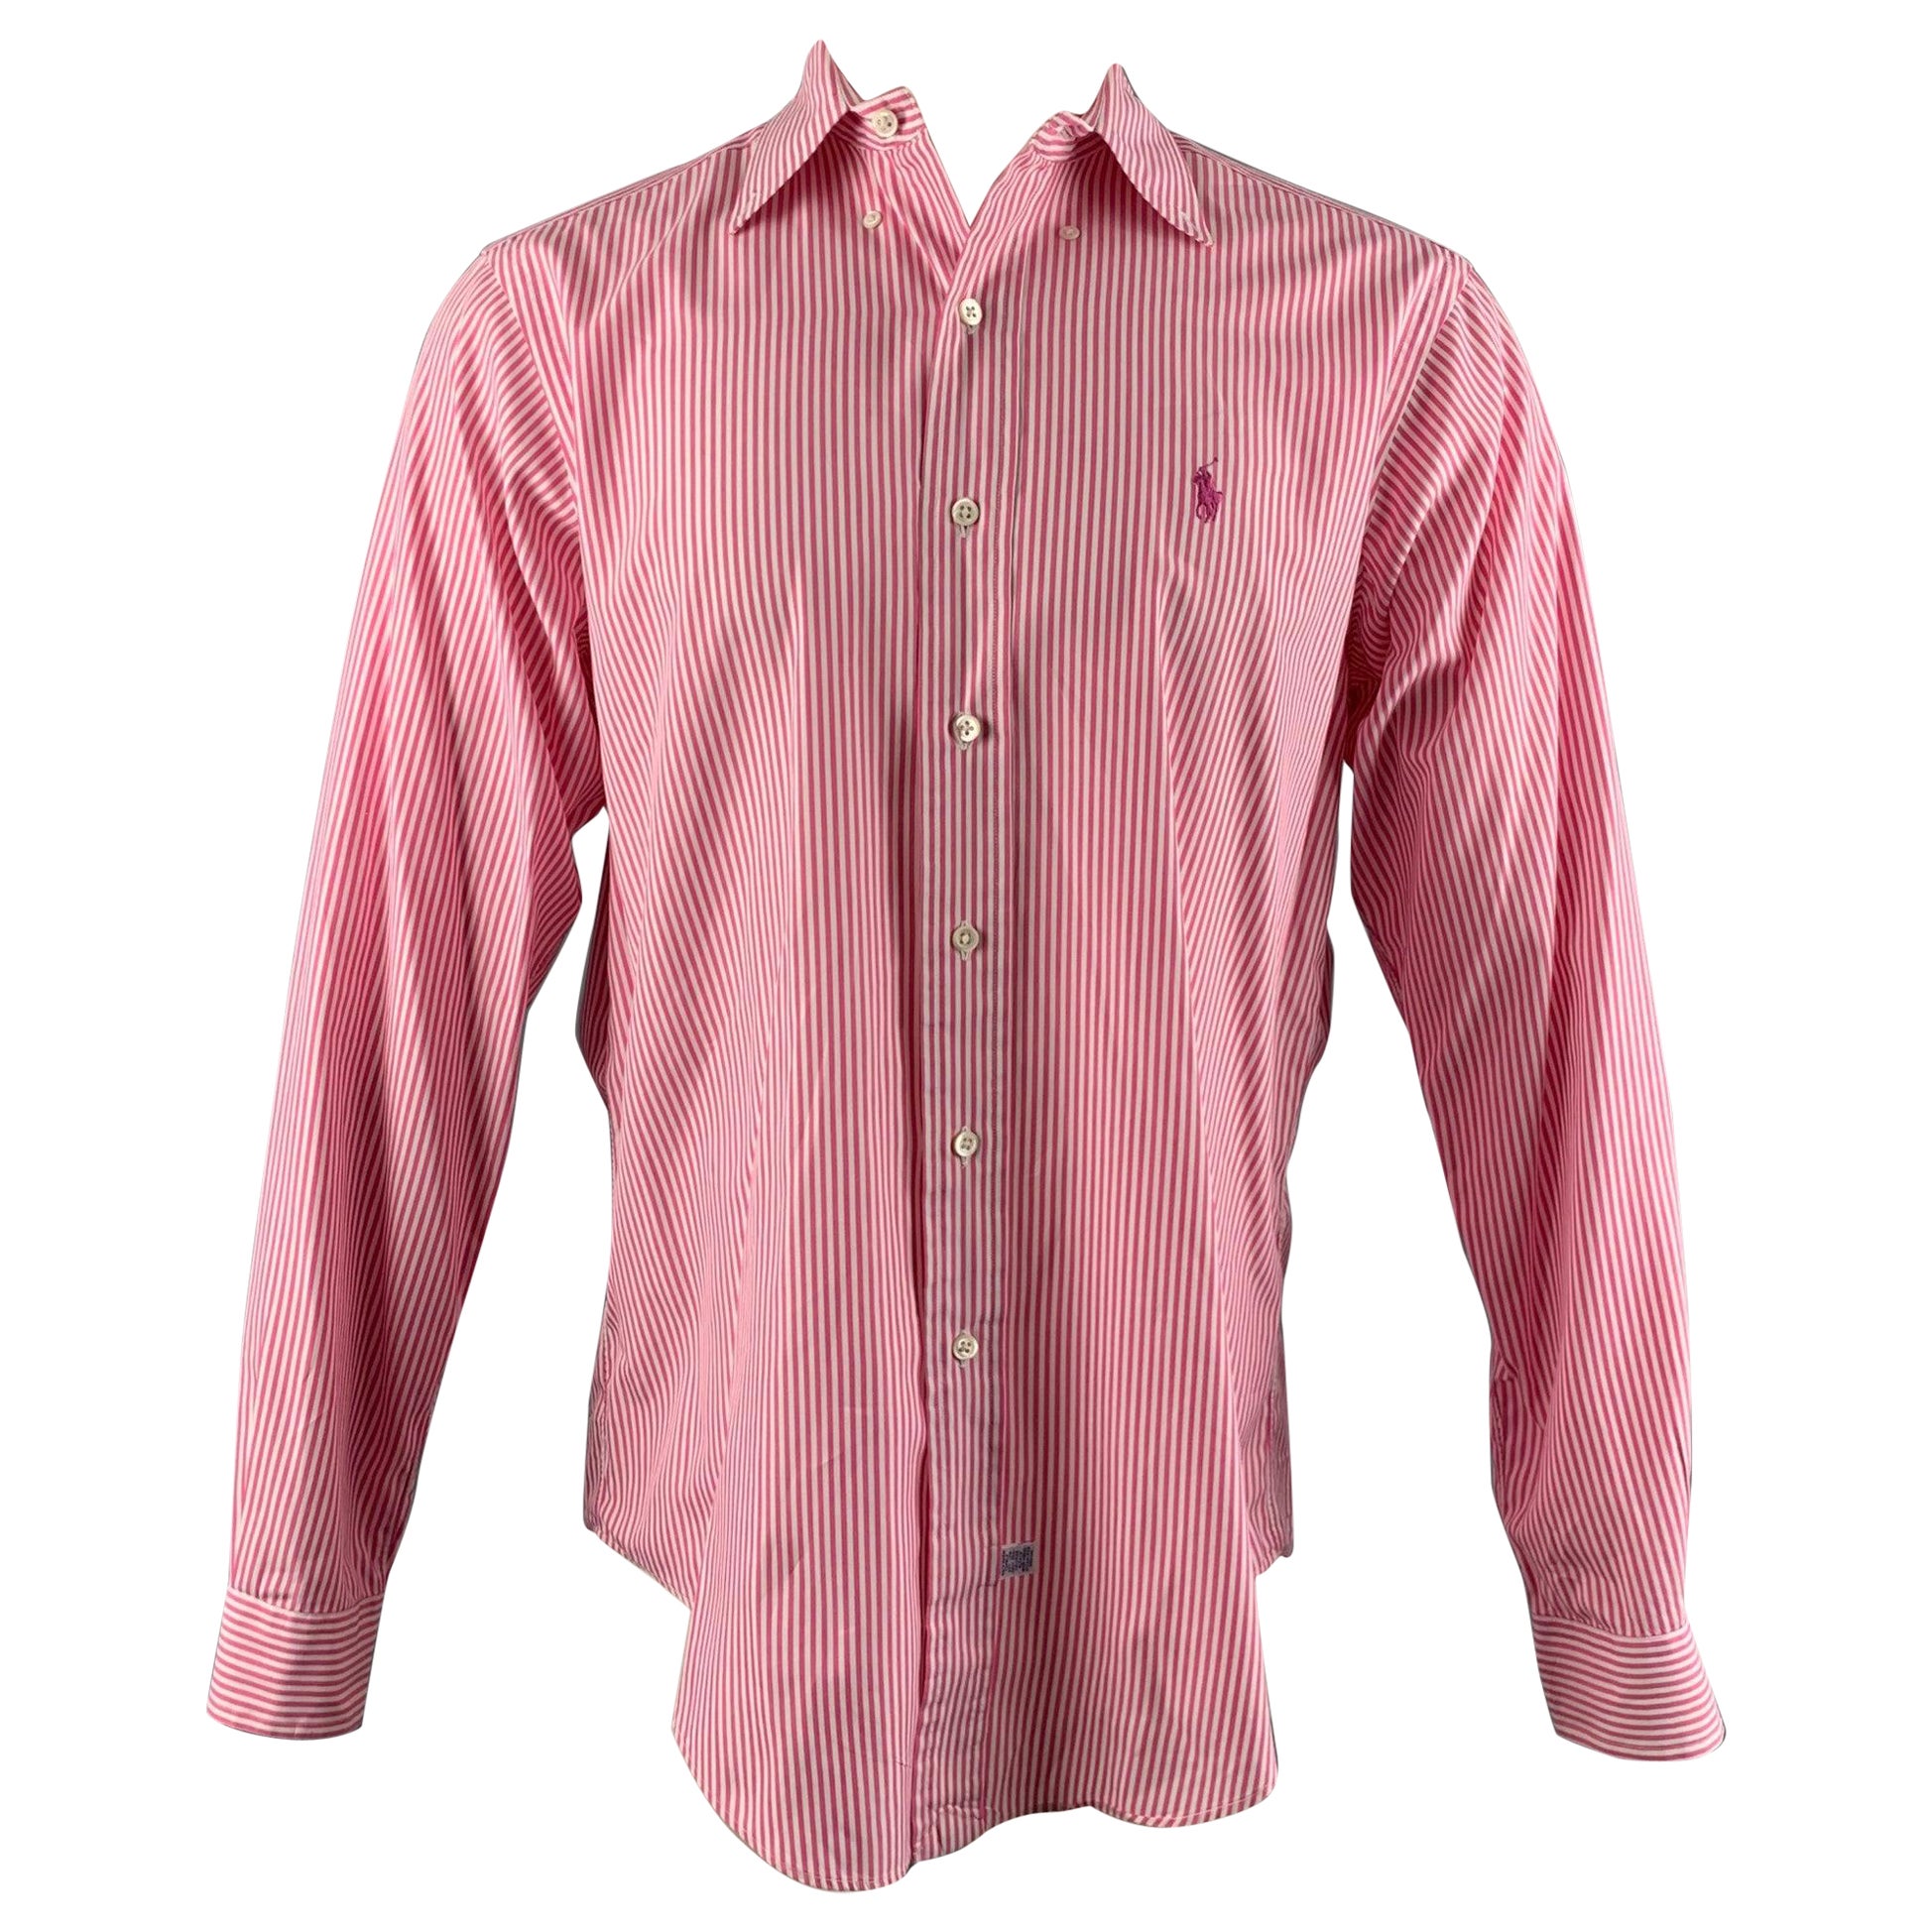 RALPH LAUREN Size M Pink White Stripe Cotton Long Sleeve Shirt